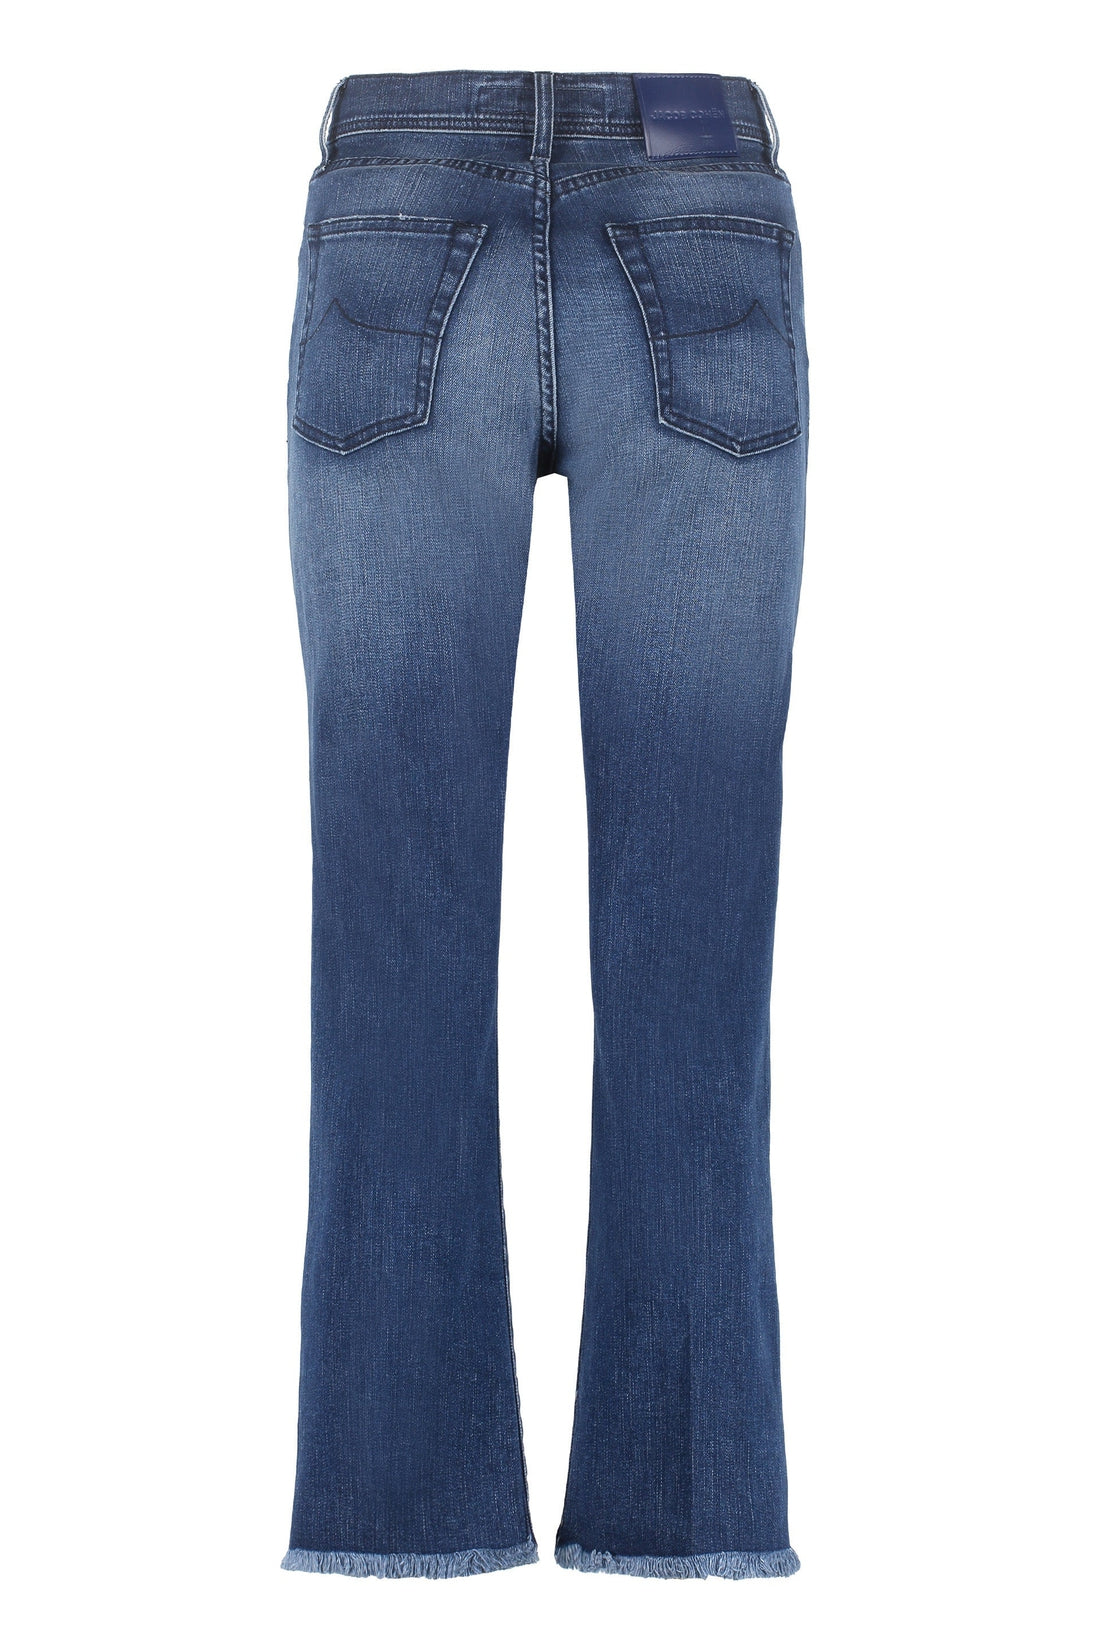 Jacob Cohen-OUTLET-SALE-High-rise straight cropped jeans-ARCHIVIST